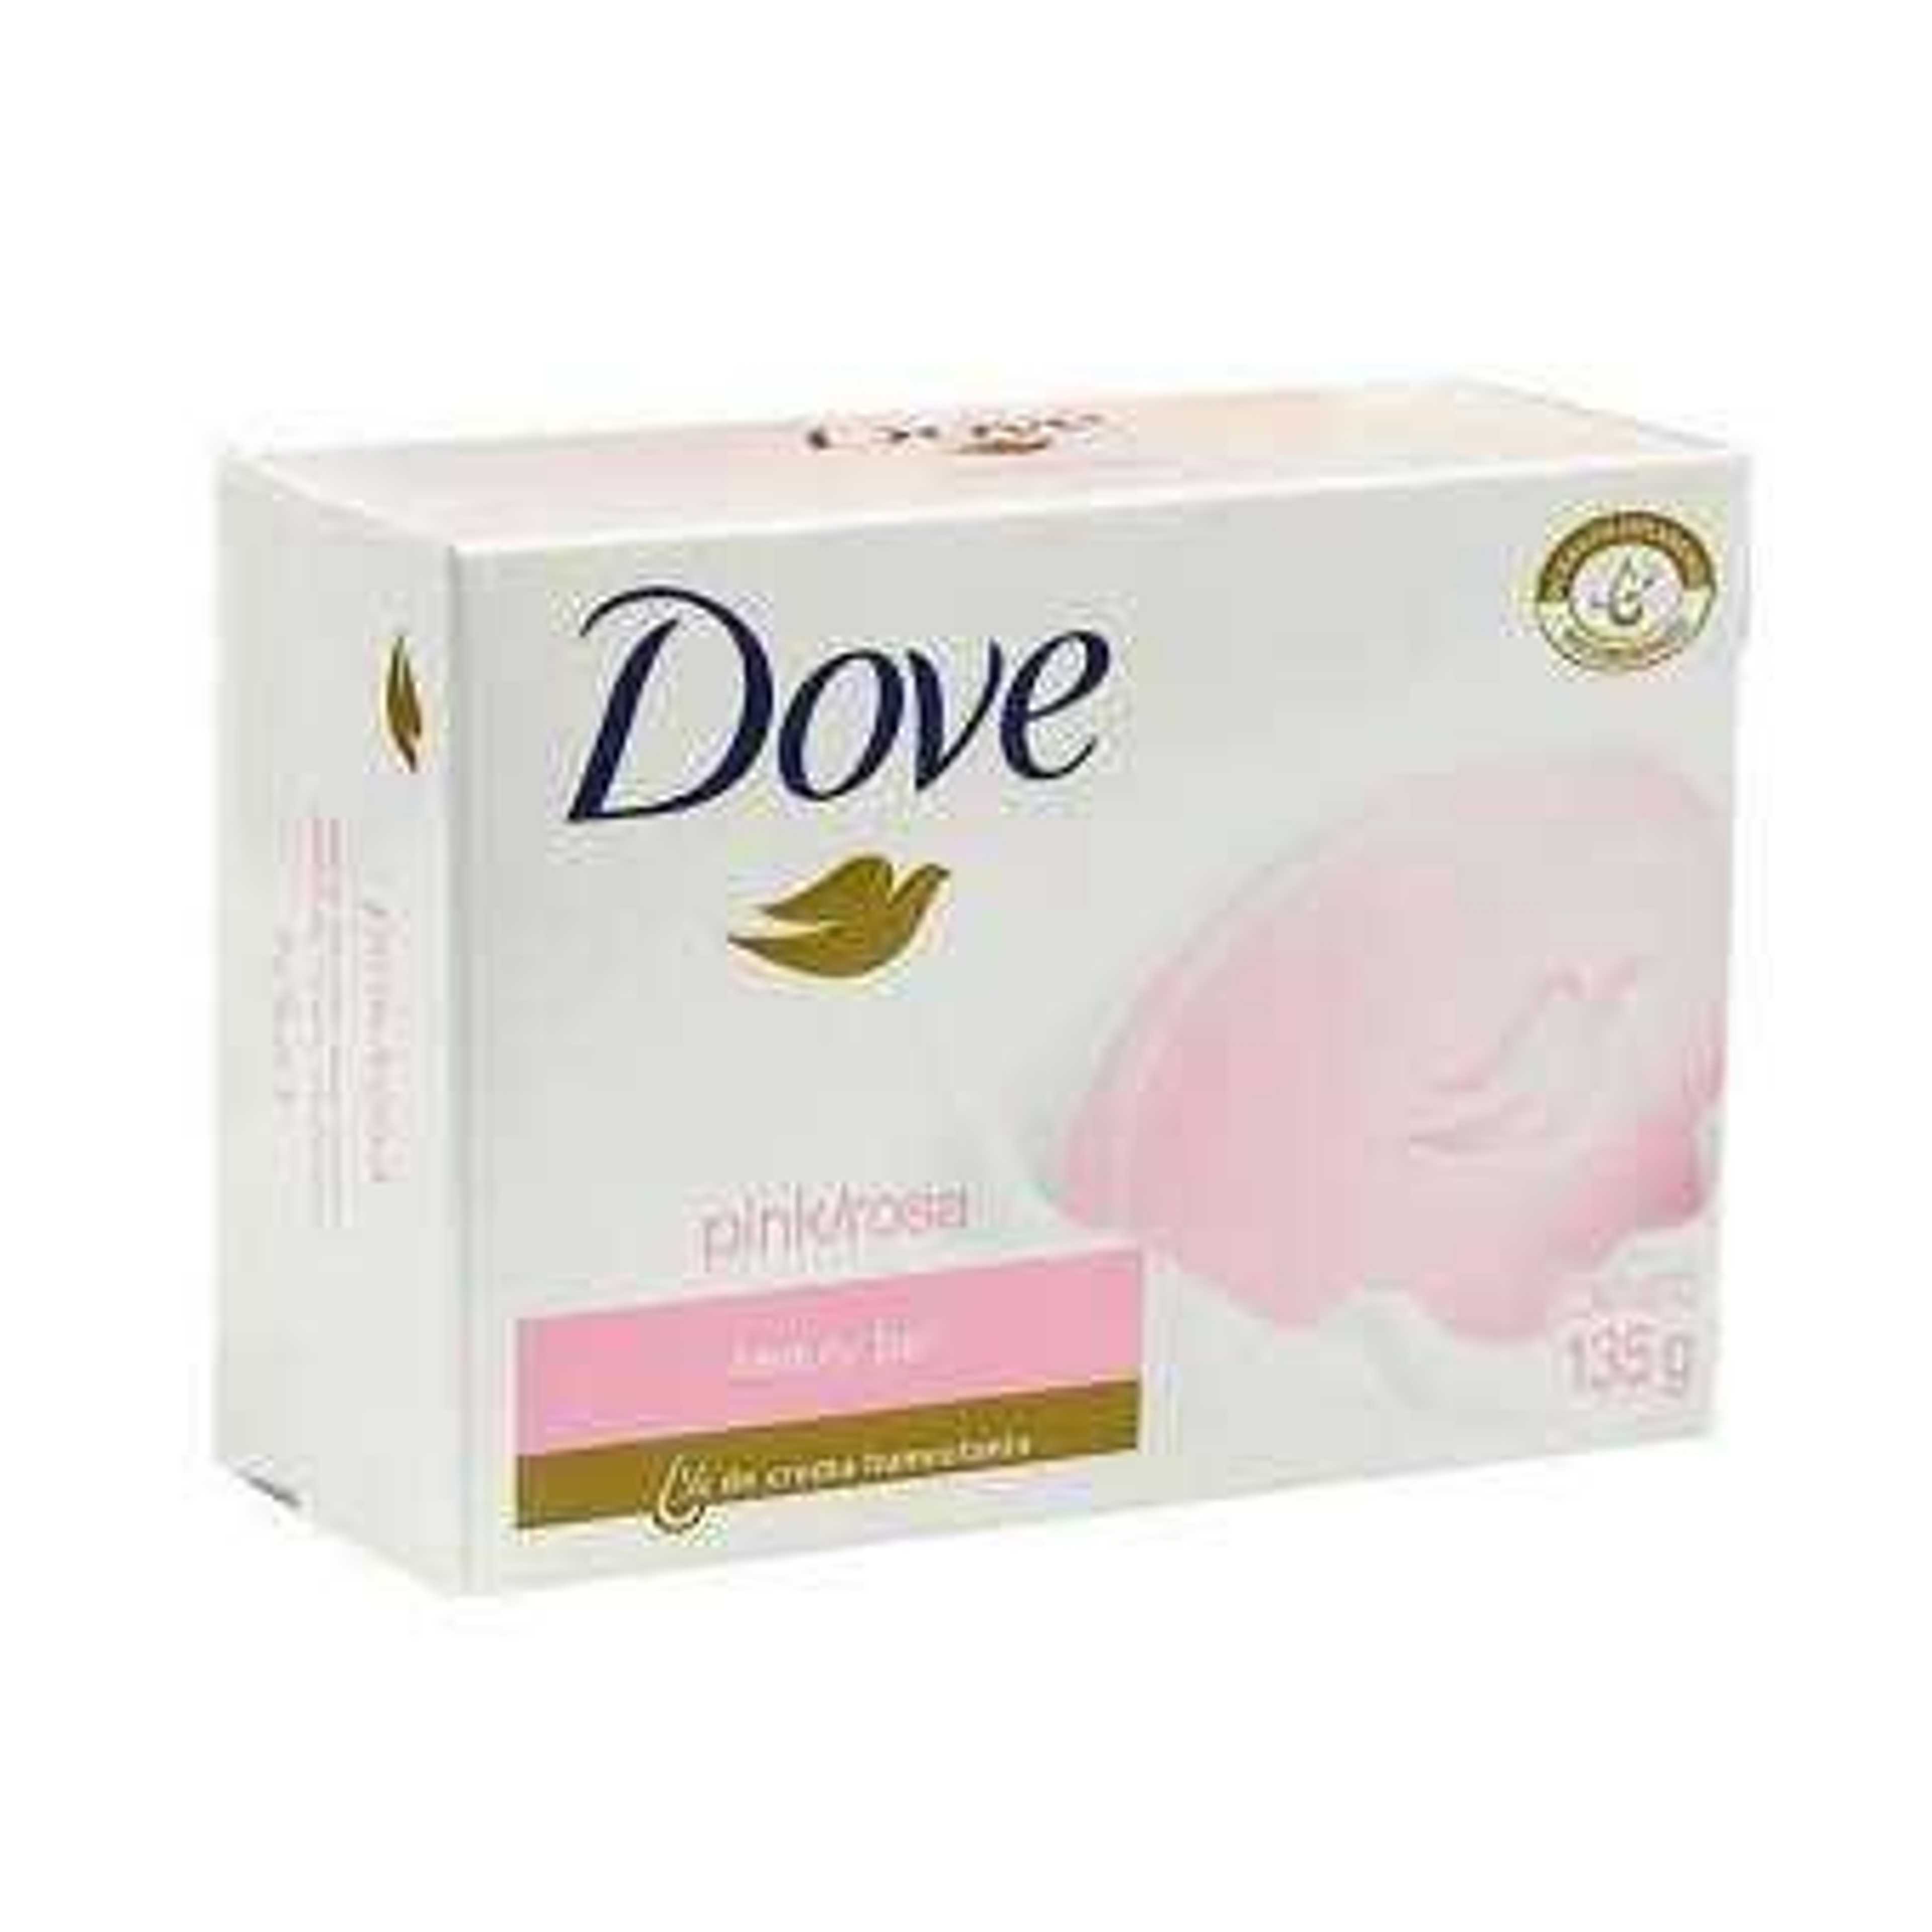 Doves soap pink 135g doves soap germany